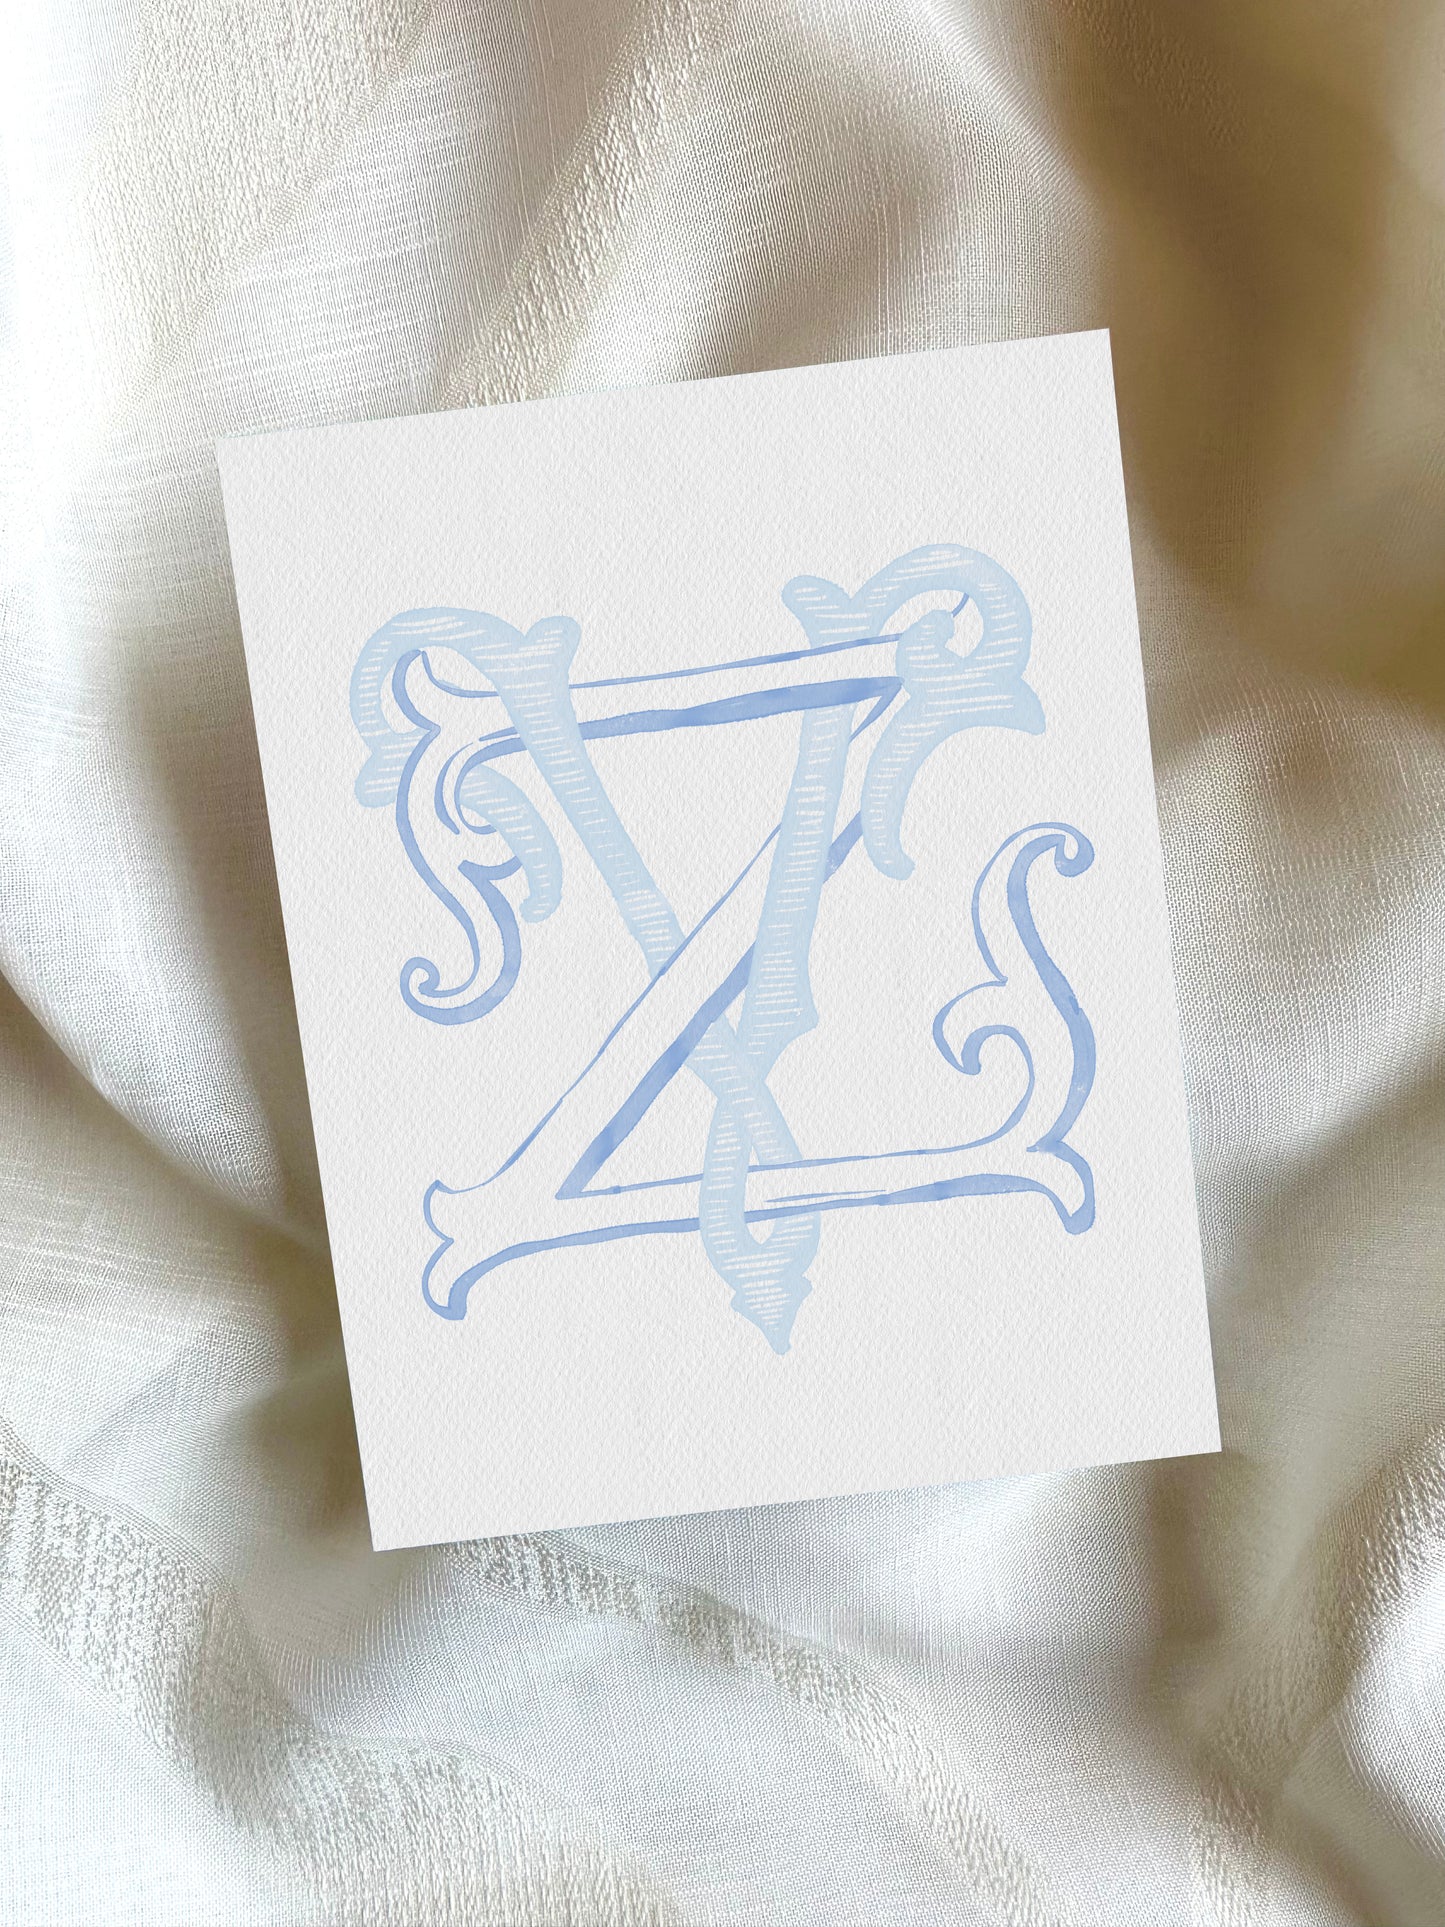 2 Letter Monogram with Letters VZ ZV | Digital Download - Wedding Monogram SVG, Personal Logo, Wedding Logo for Wedding Invitations The Wedding Crest Lab